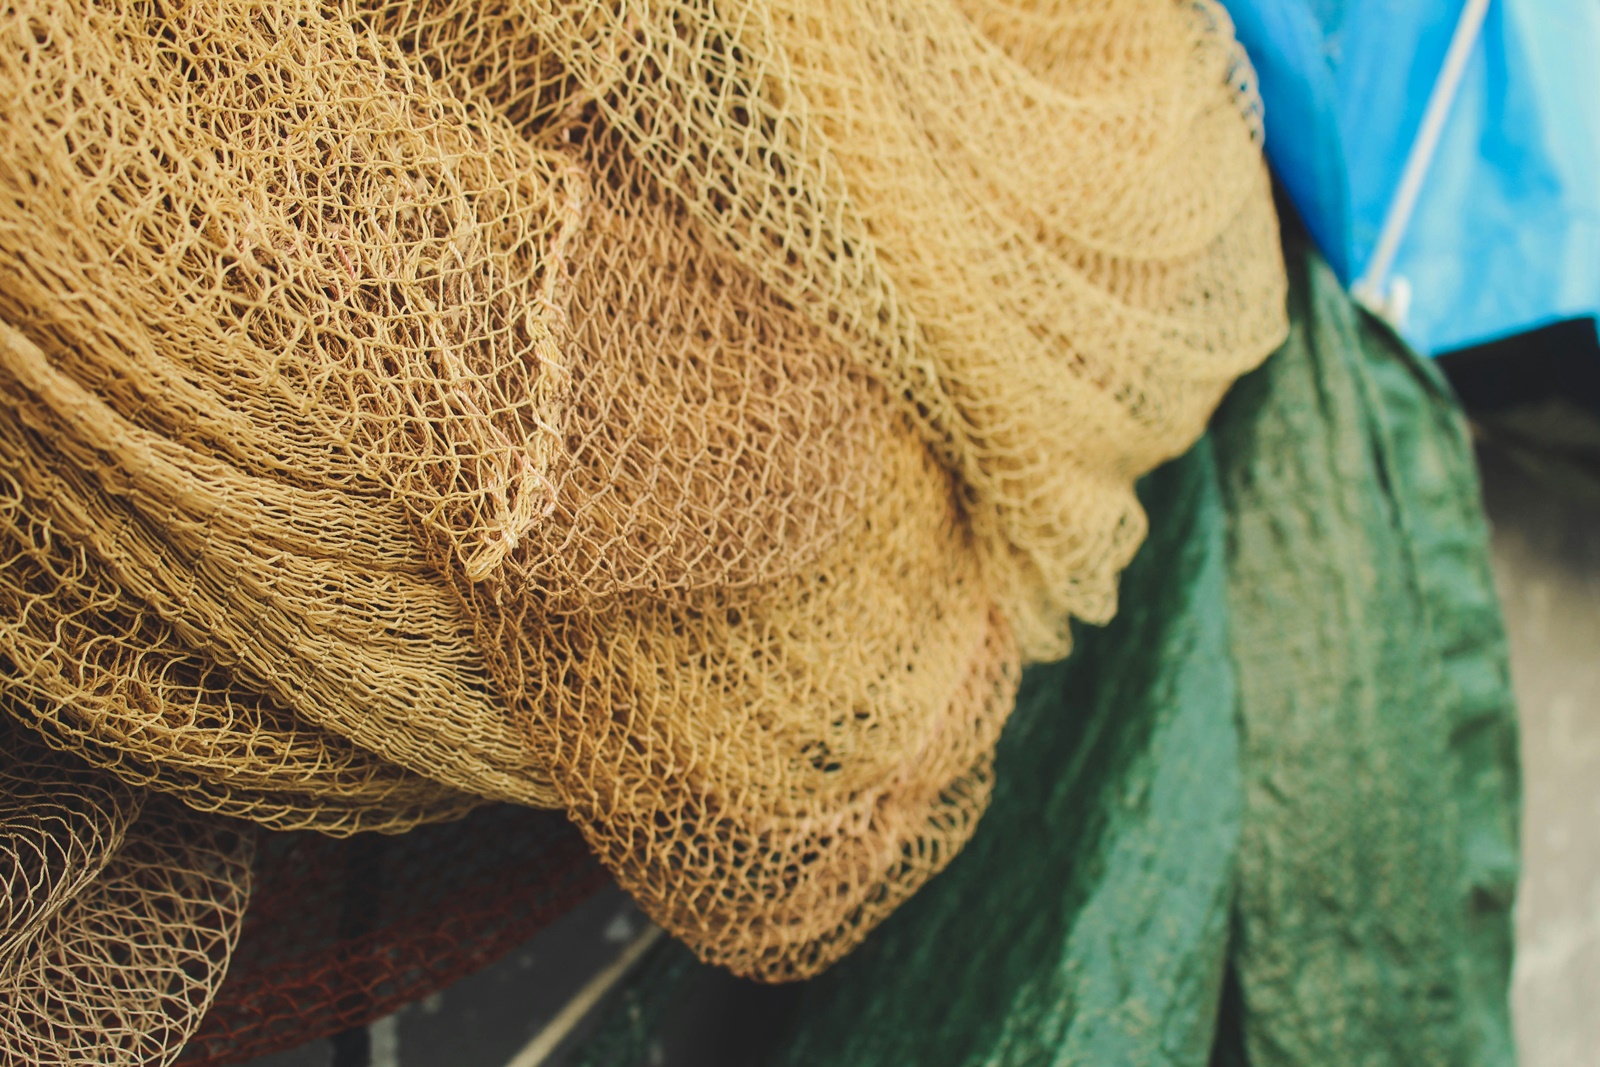 Tόνος 485 κιλών Αστακός: Μια απίστευτη ψαριά